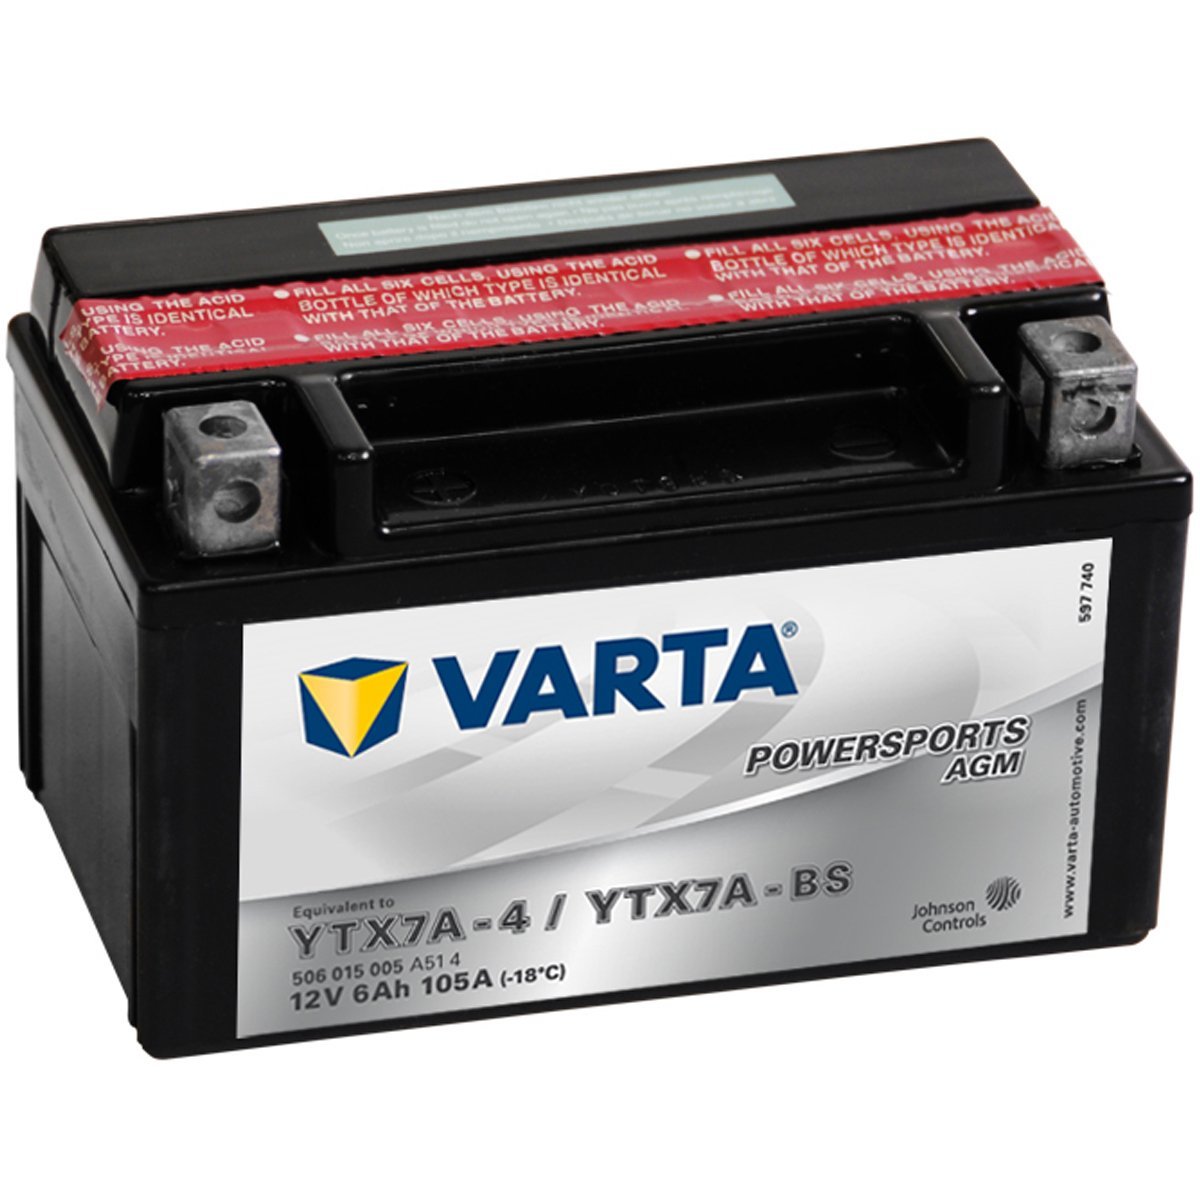 Varta 506015005A514 Starterbatterie von Varta